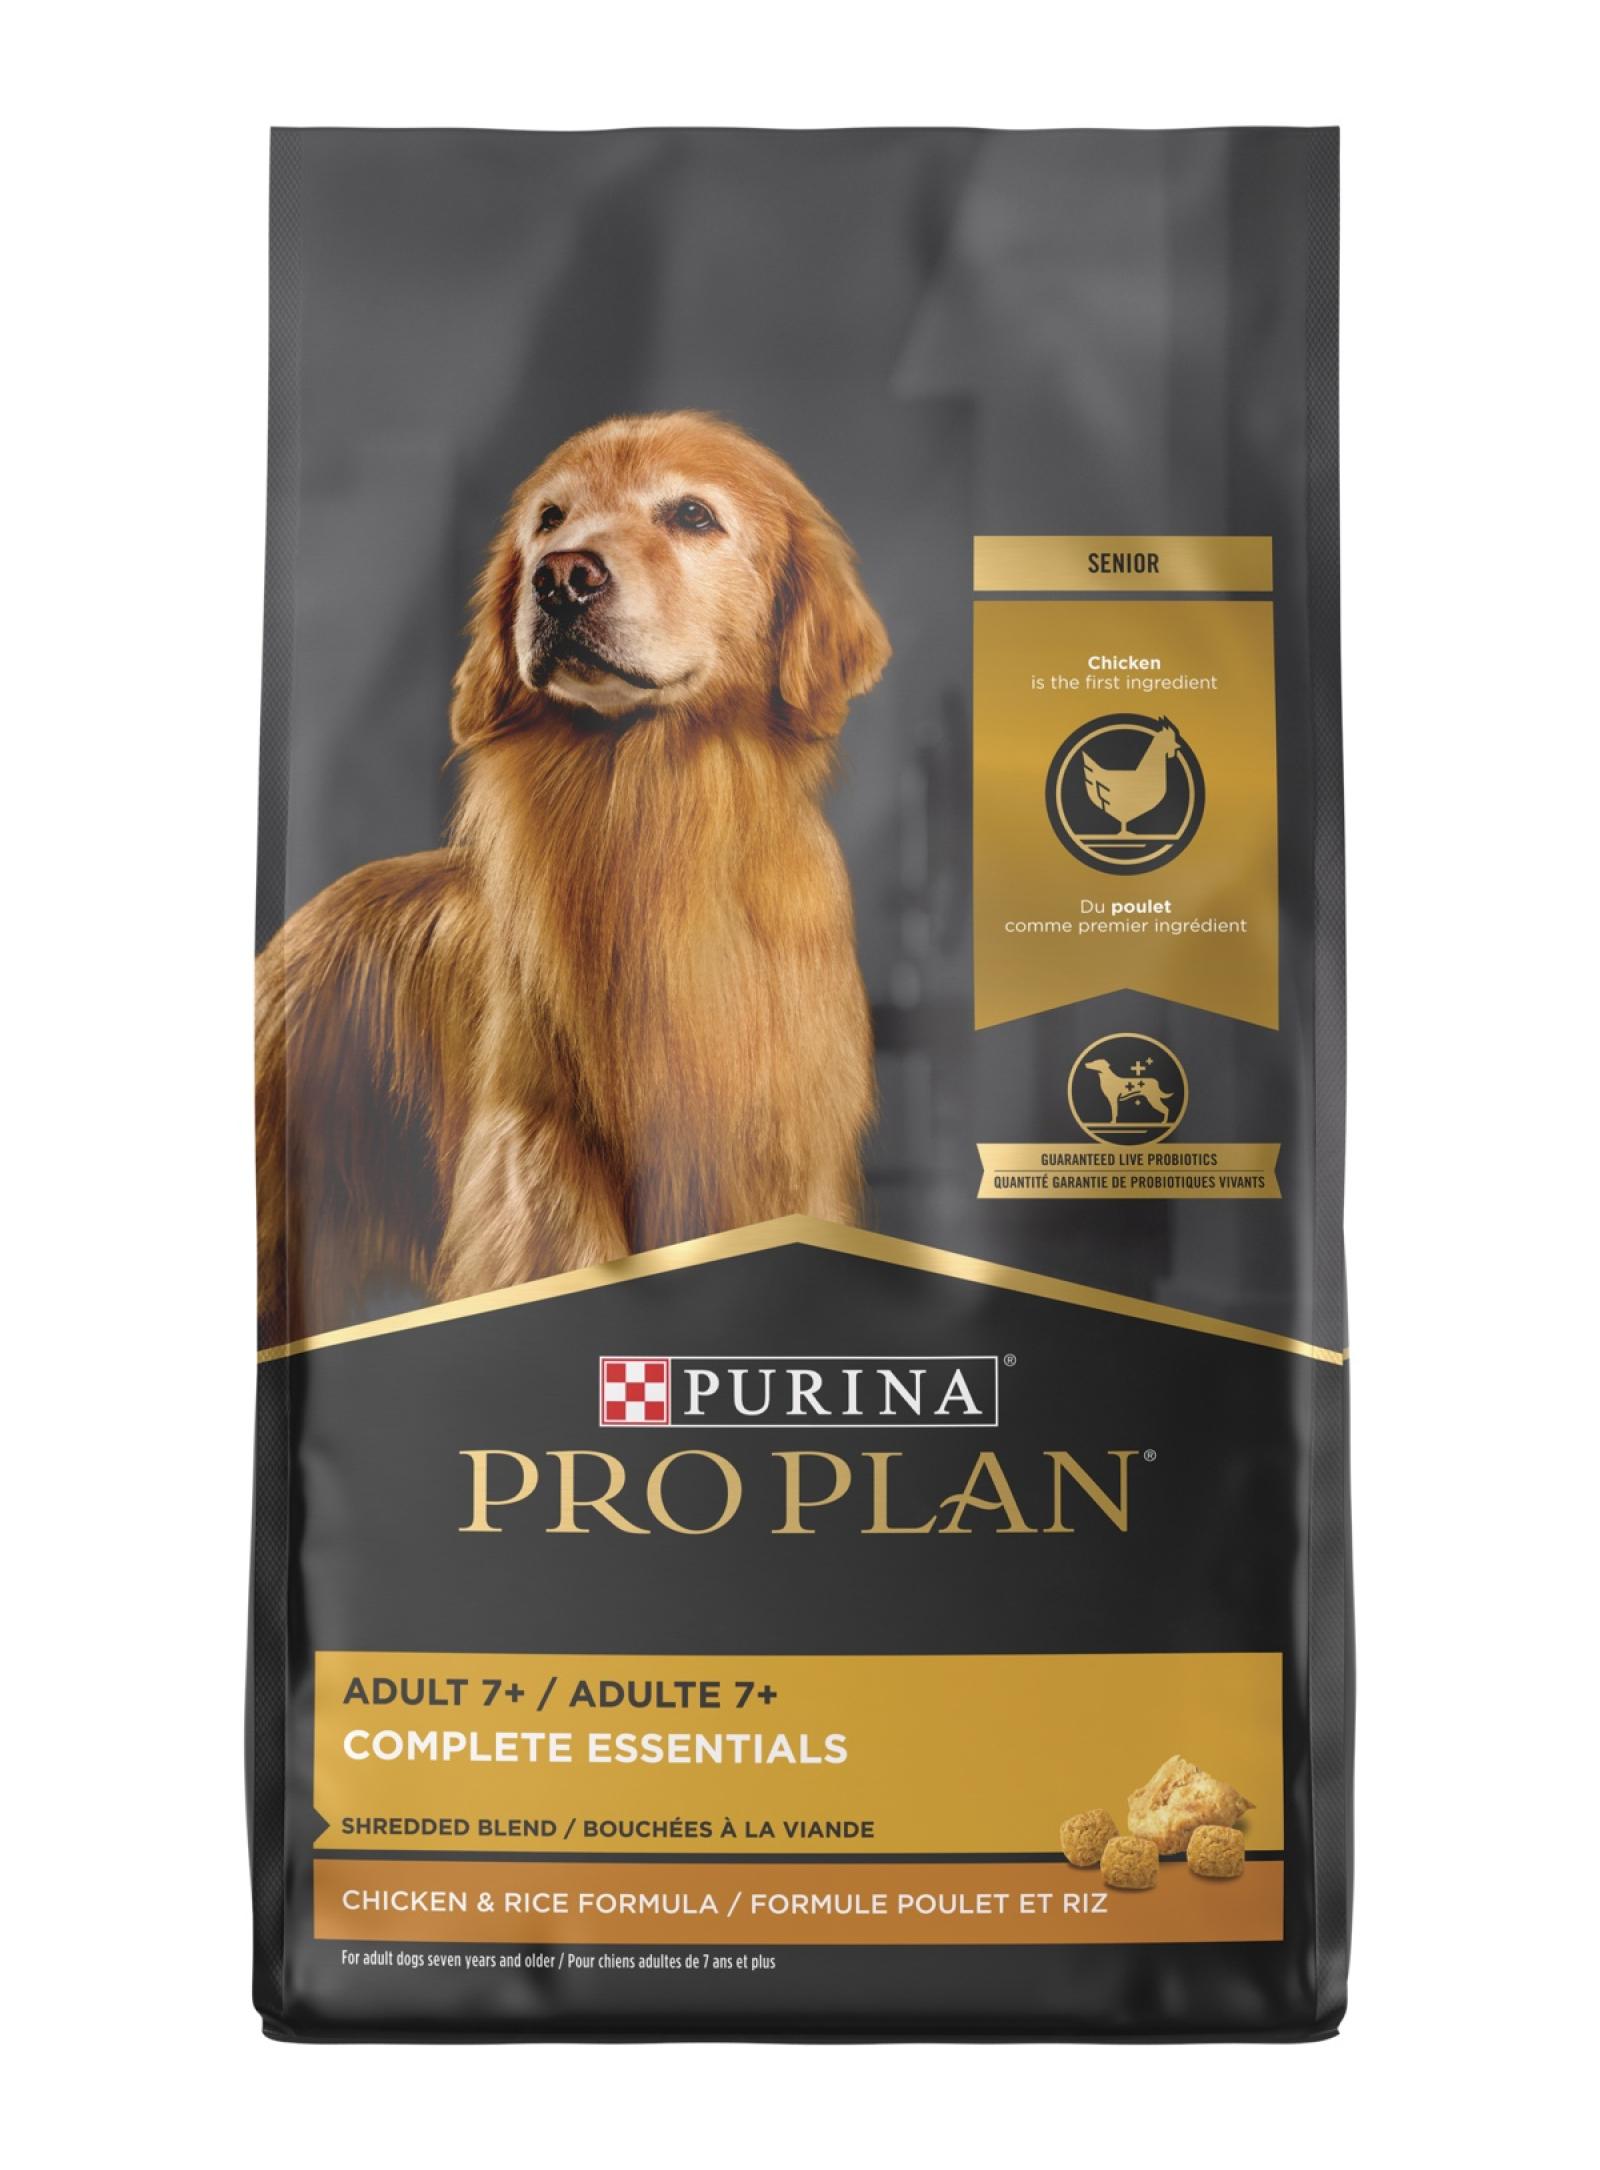 Purina Pro Plan Adult 7+ Complete Essentials Shredded Blend Chicken & Rice Formula